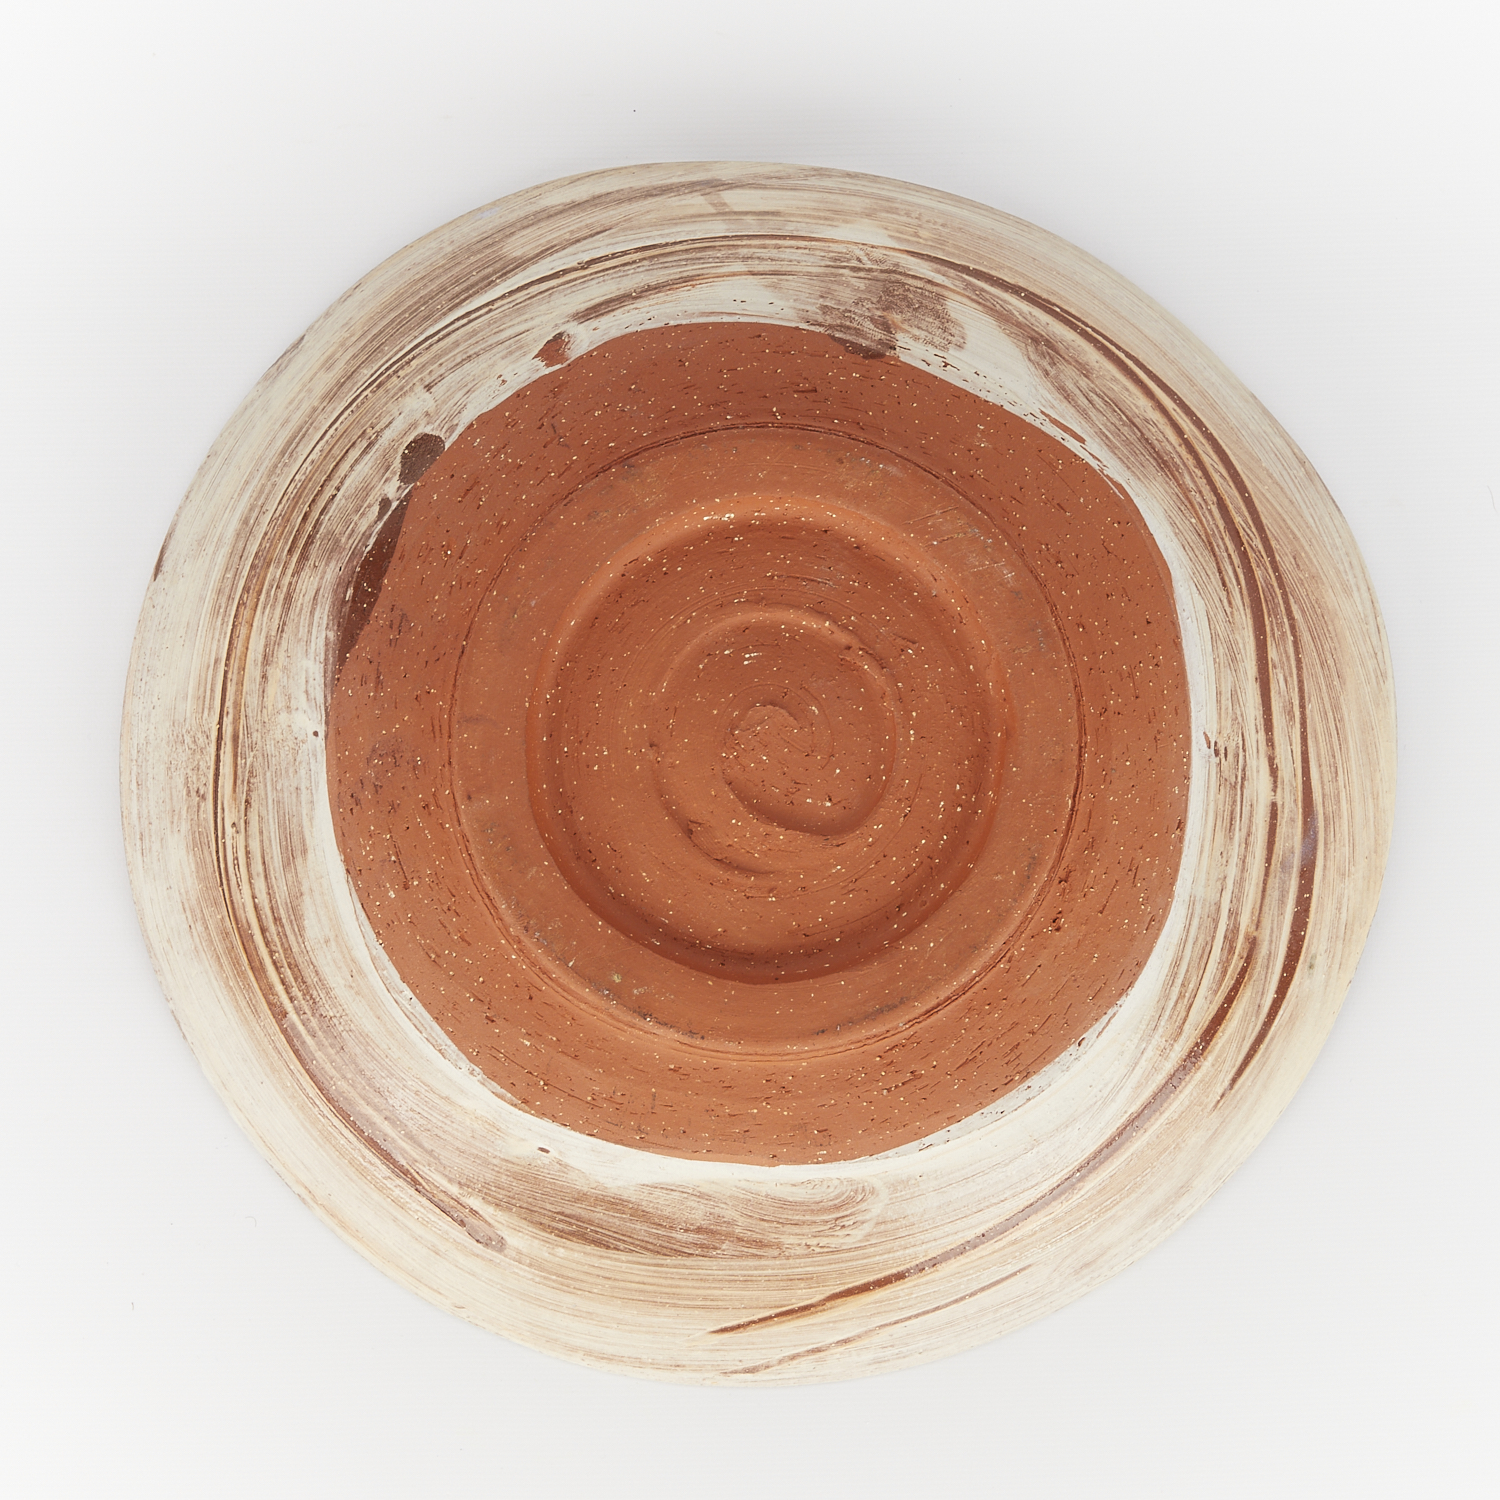 Ron Meyers Ceramic Hand-Painted Rabbit Bowl - Image 8 of 9